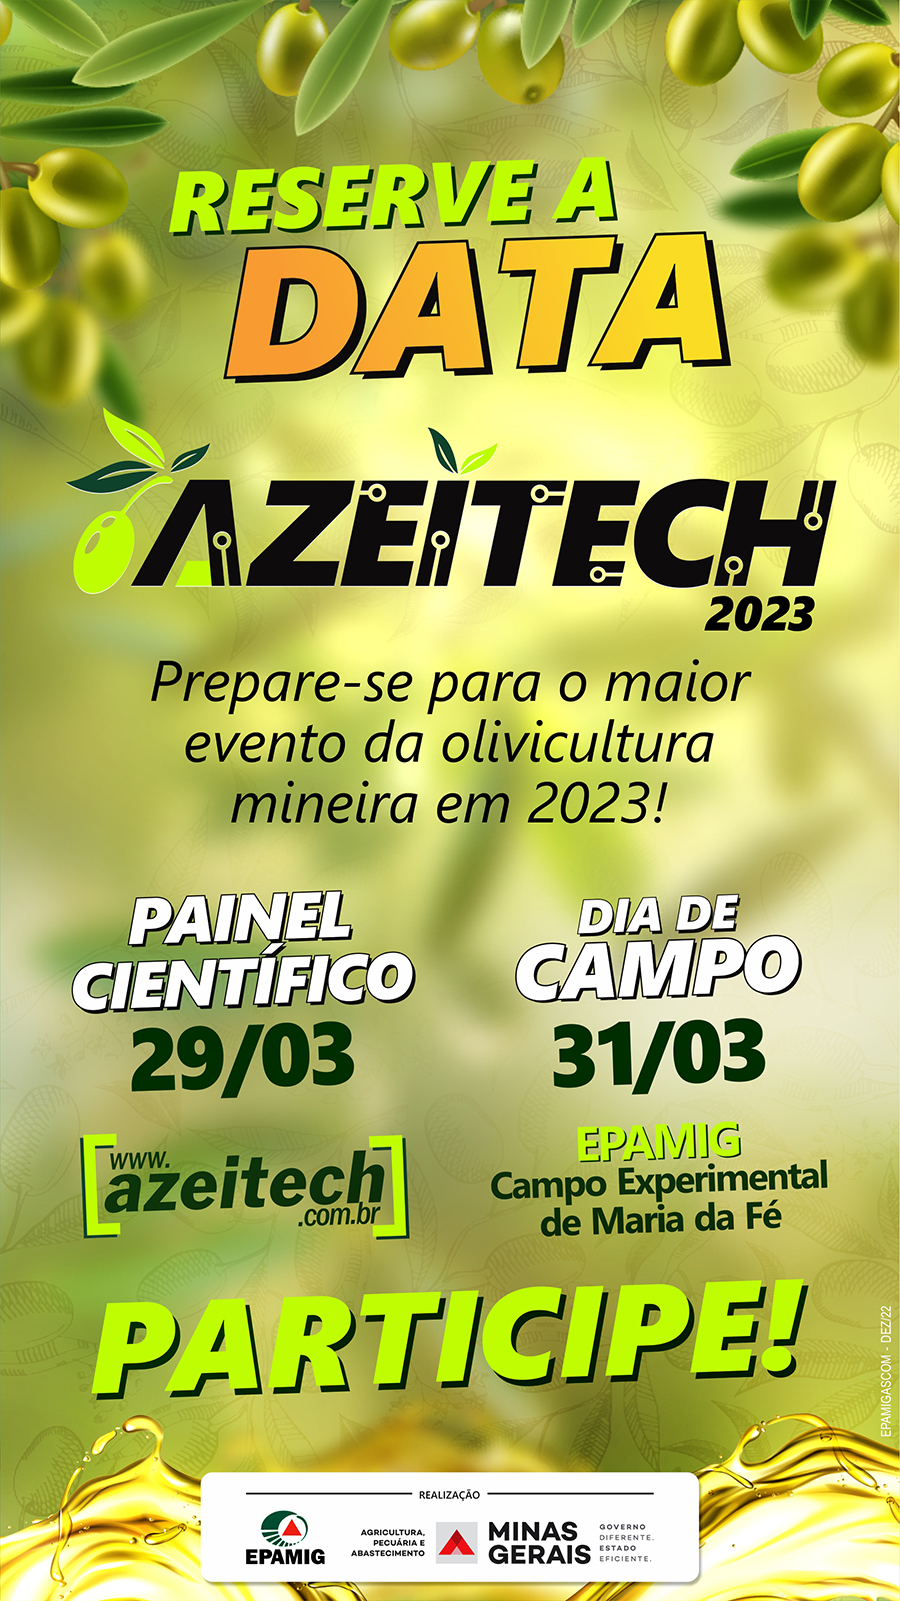 Azeitech 2023 - Salve a data! @ EPAMIG - Campo Experimental de Maria da Fé